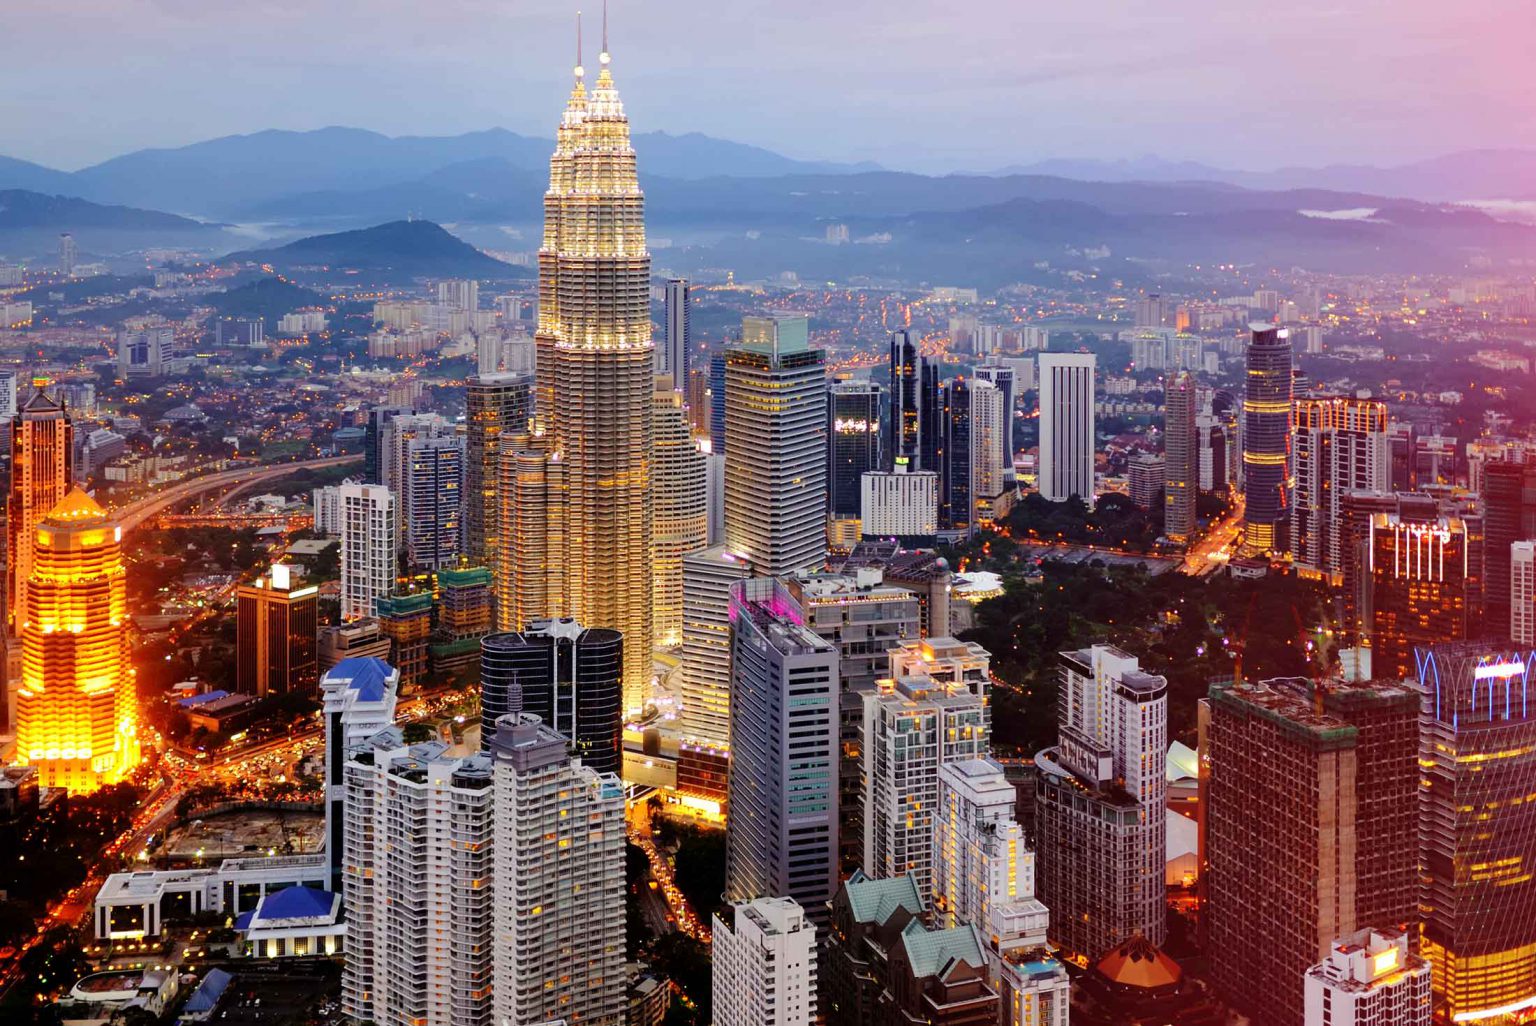 Kaula Lumpur 8 Asias must visit place in 2018 3 1536x1026 1